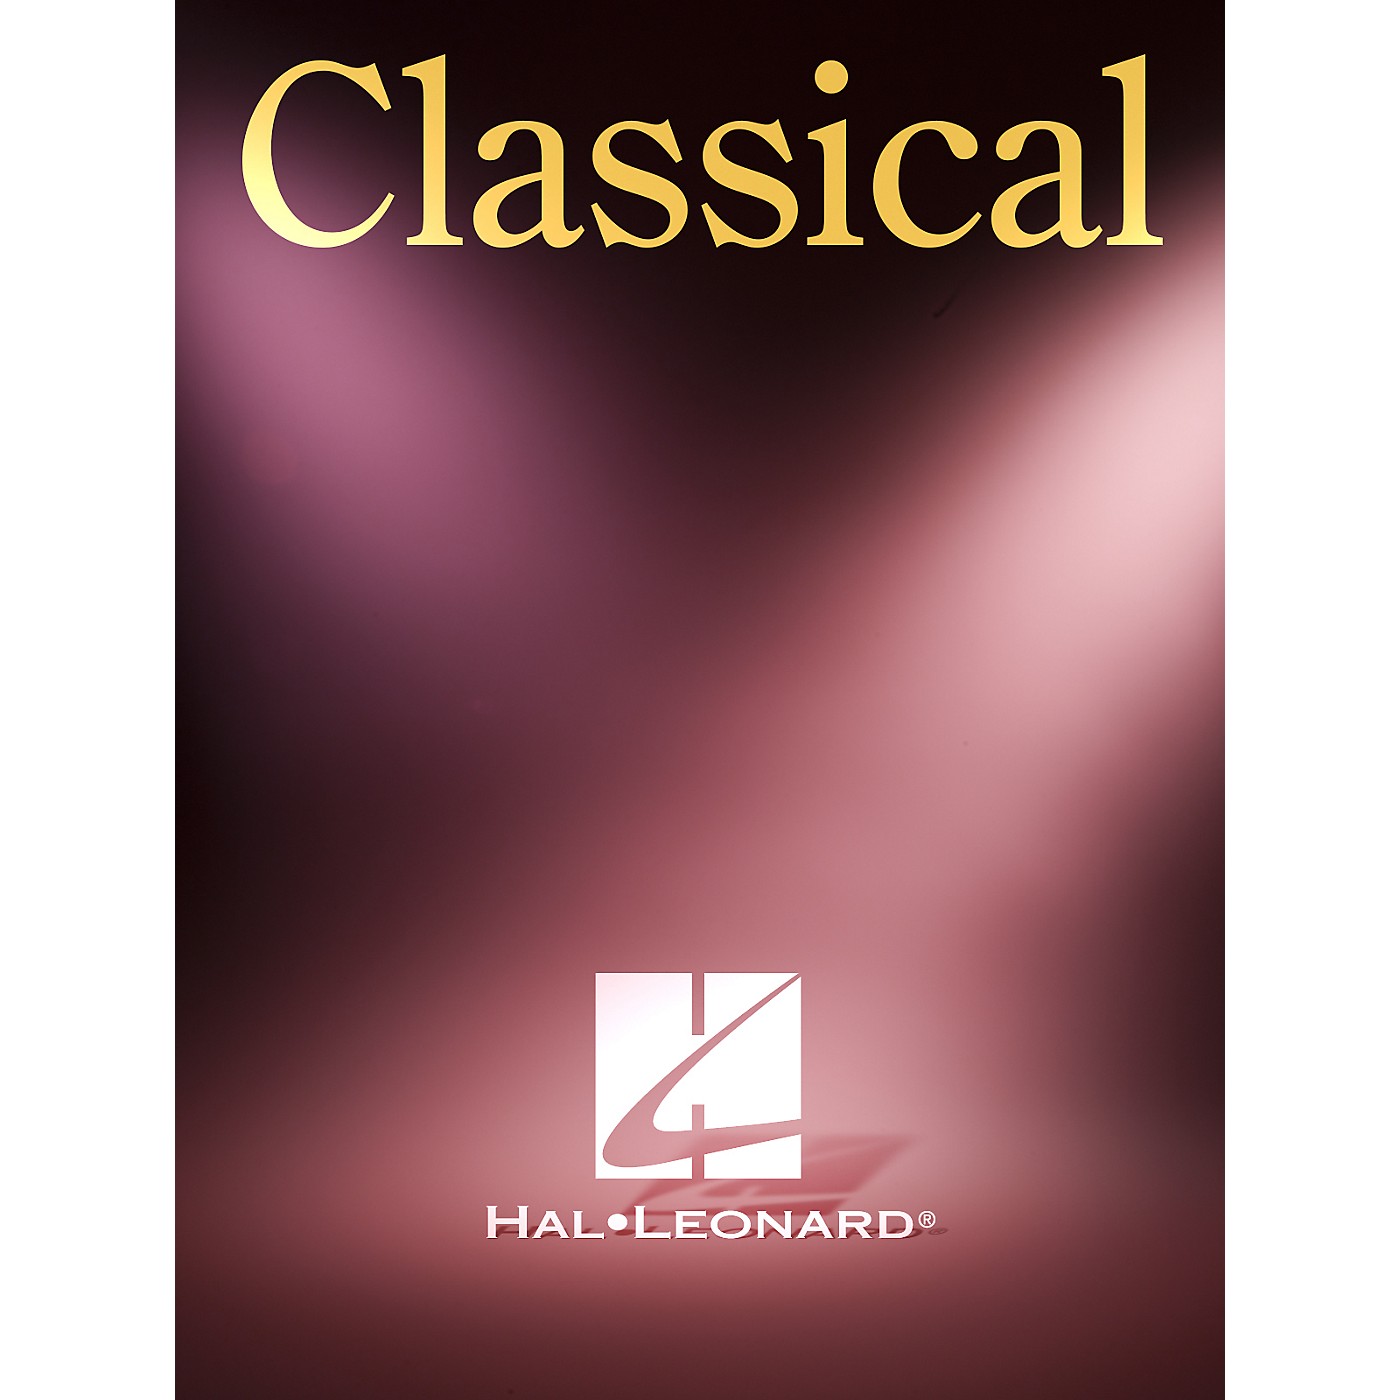 Hal Leonard Fantasia Op. 40 Suvini Zerboni Series thumbnail